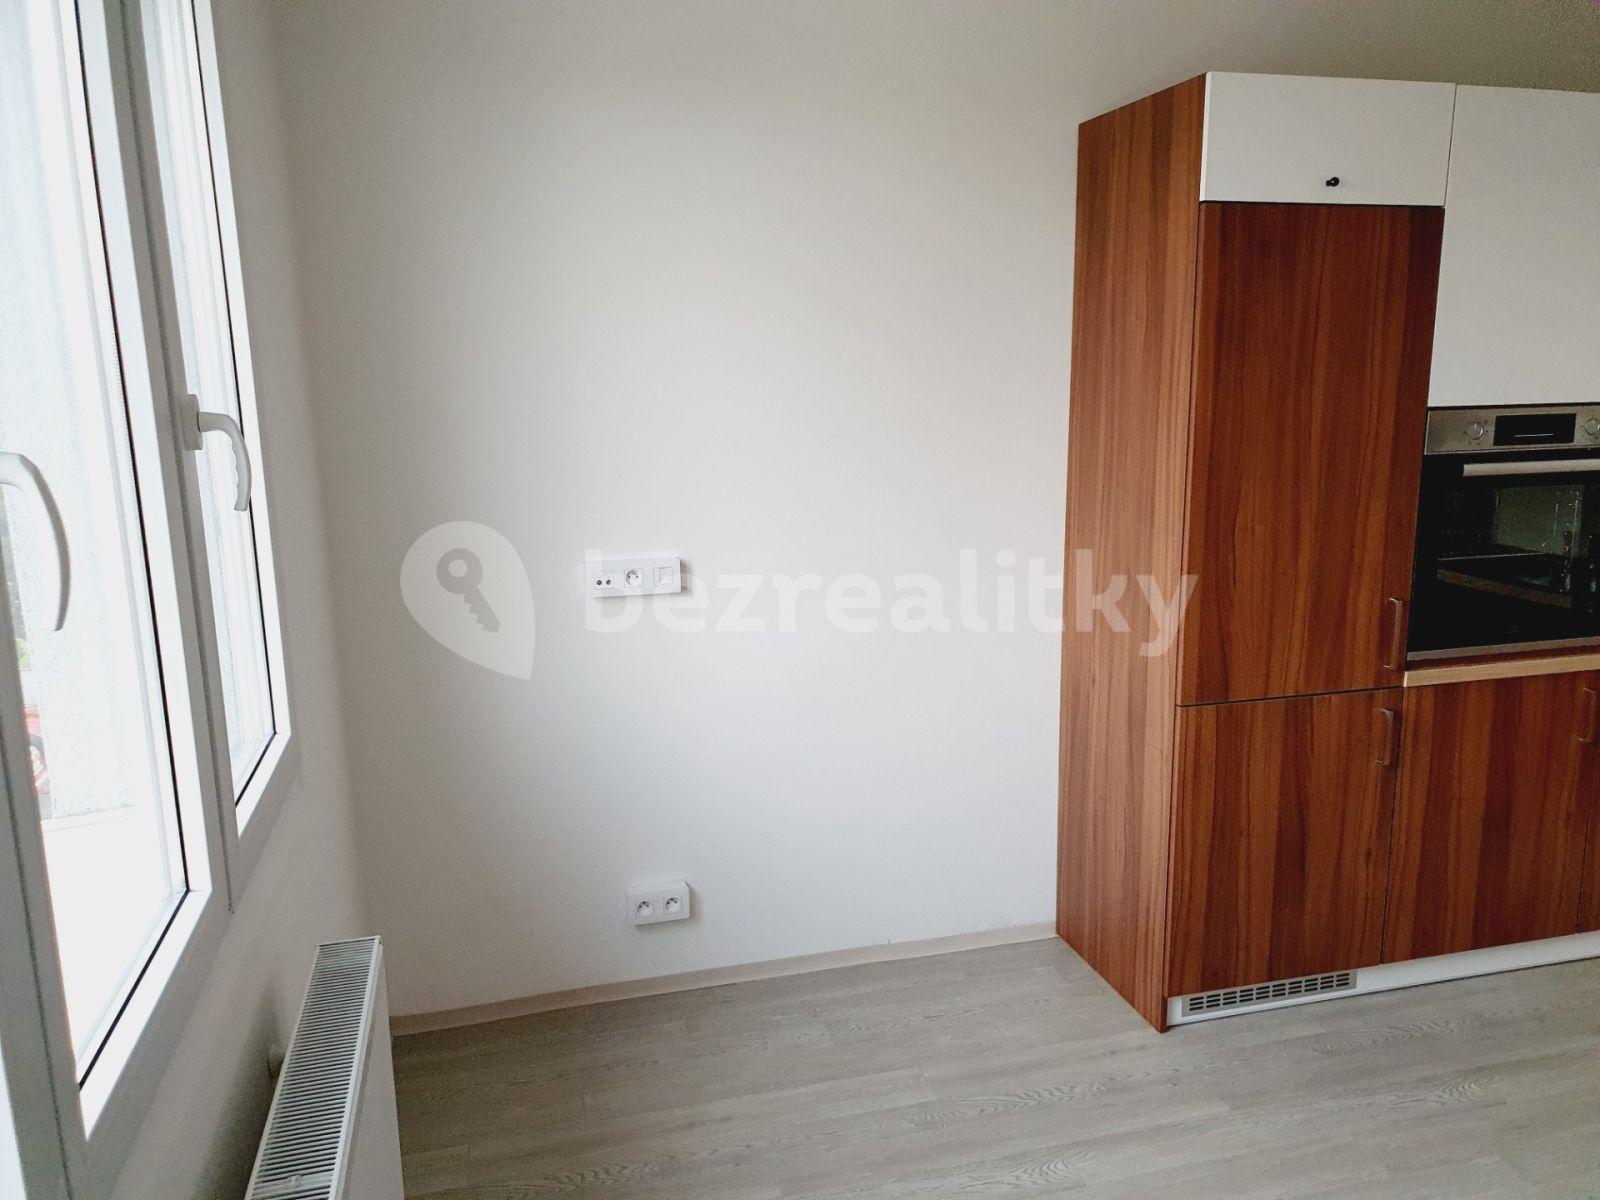 1 bedroom with open-plan kitchen flat to rent, 38 m², Rozvadov, Plzeňský Region